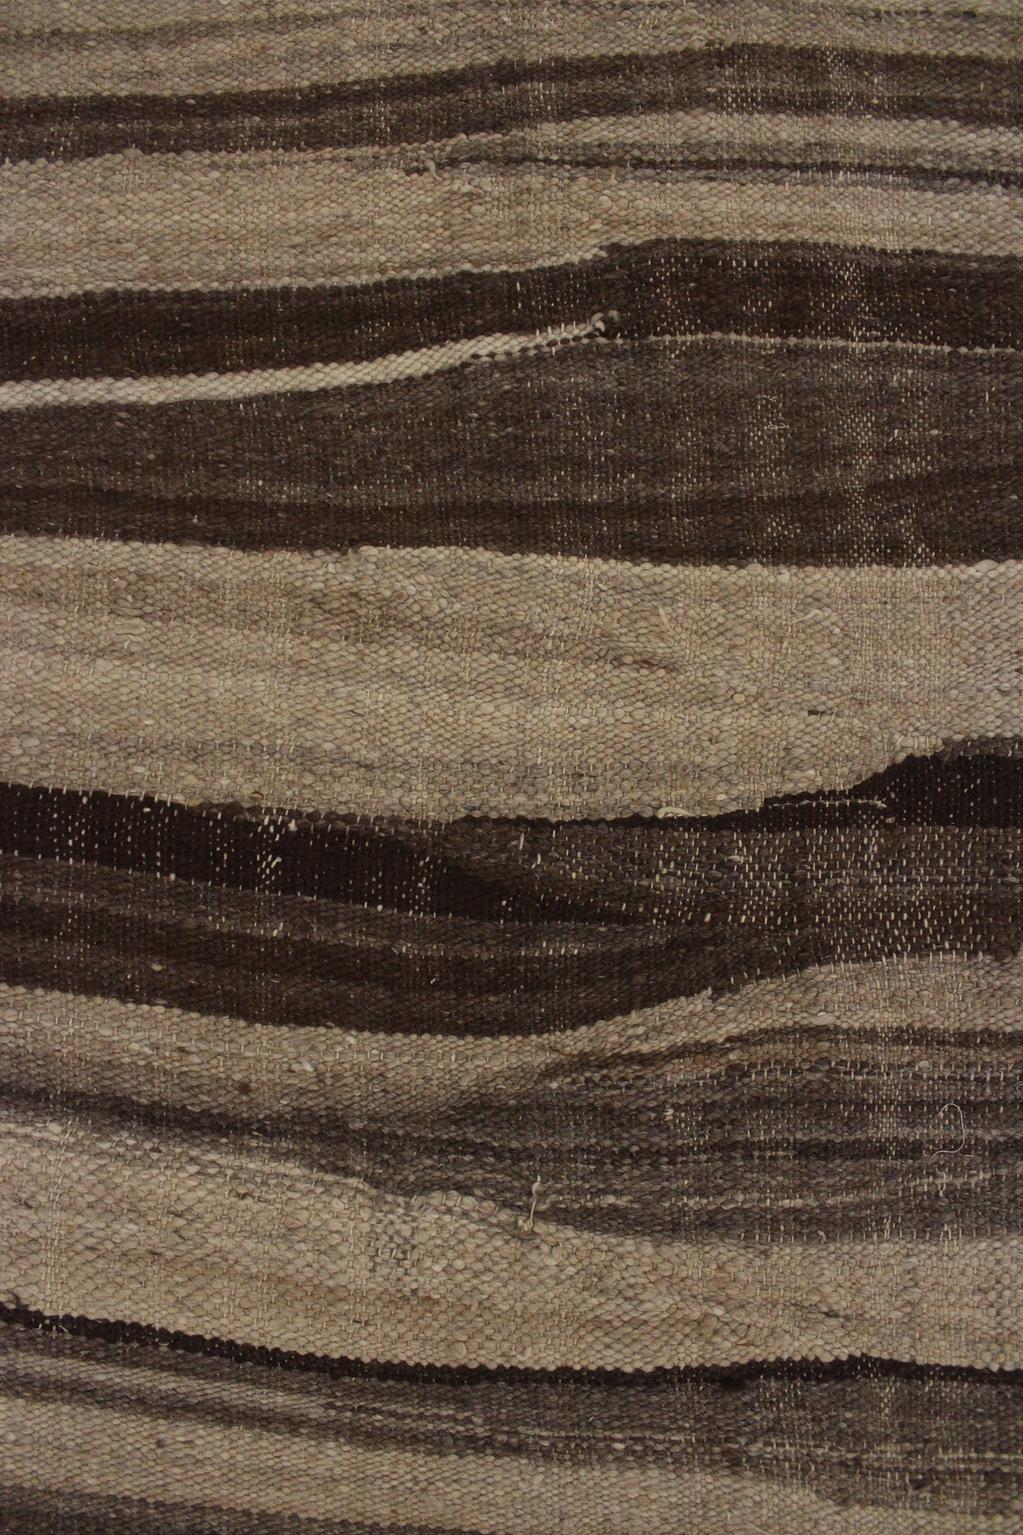 Vintage Moroccan Kilim rug - Stripes in beige+brown - 4.6x14.4feet / 142x440cm For Sale 4